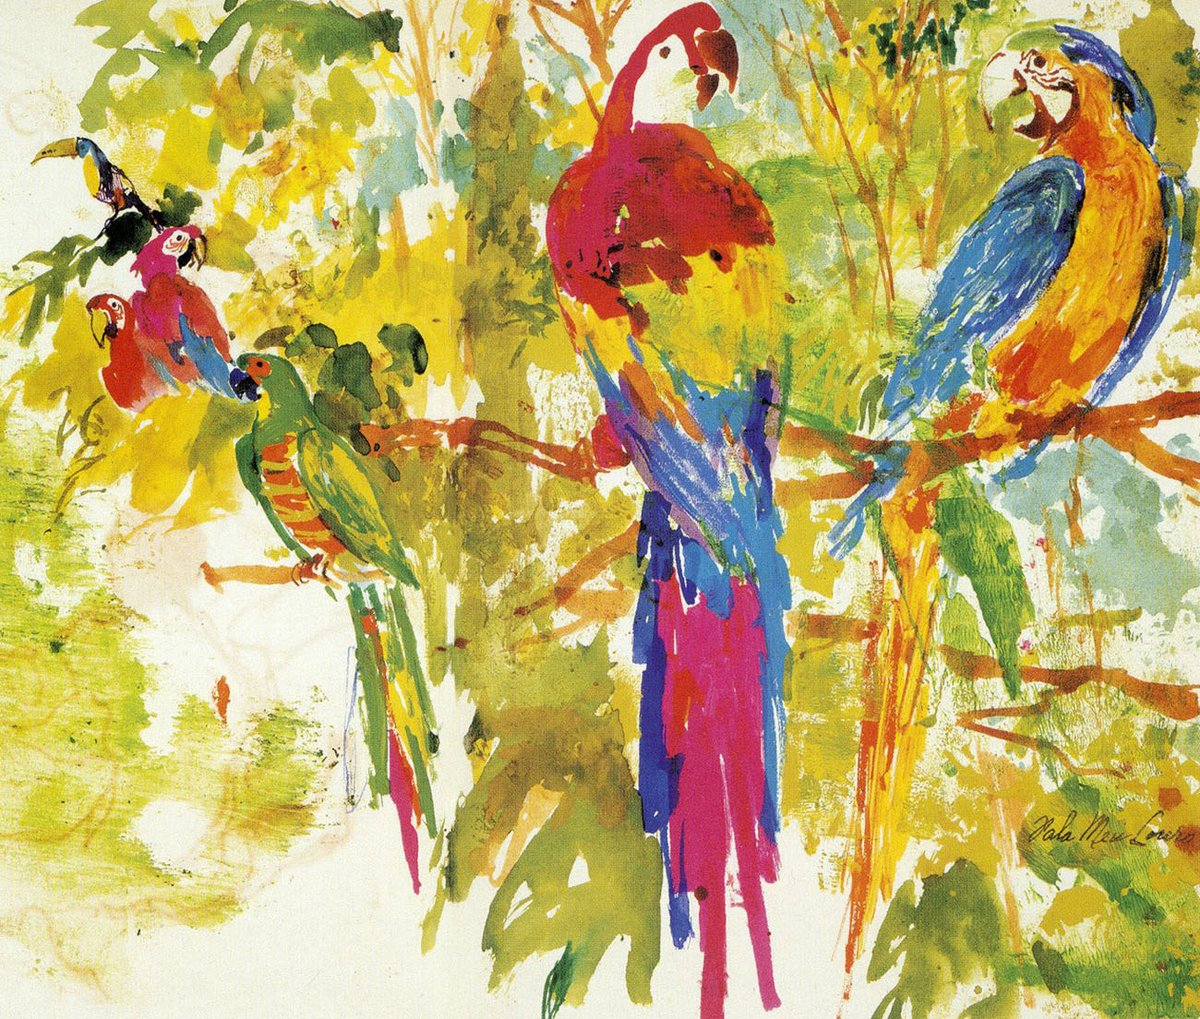 #LeRoyNeiman 

'Birds of paradise'